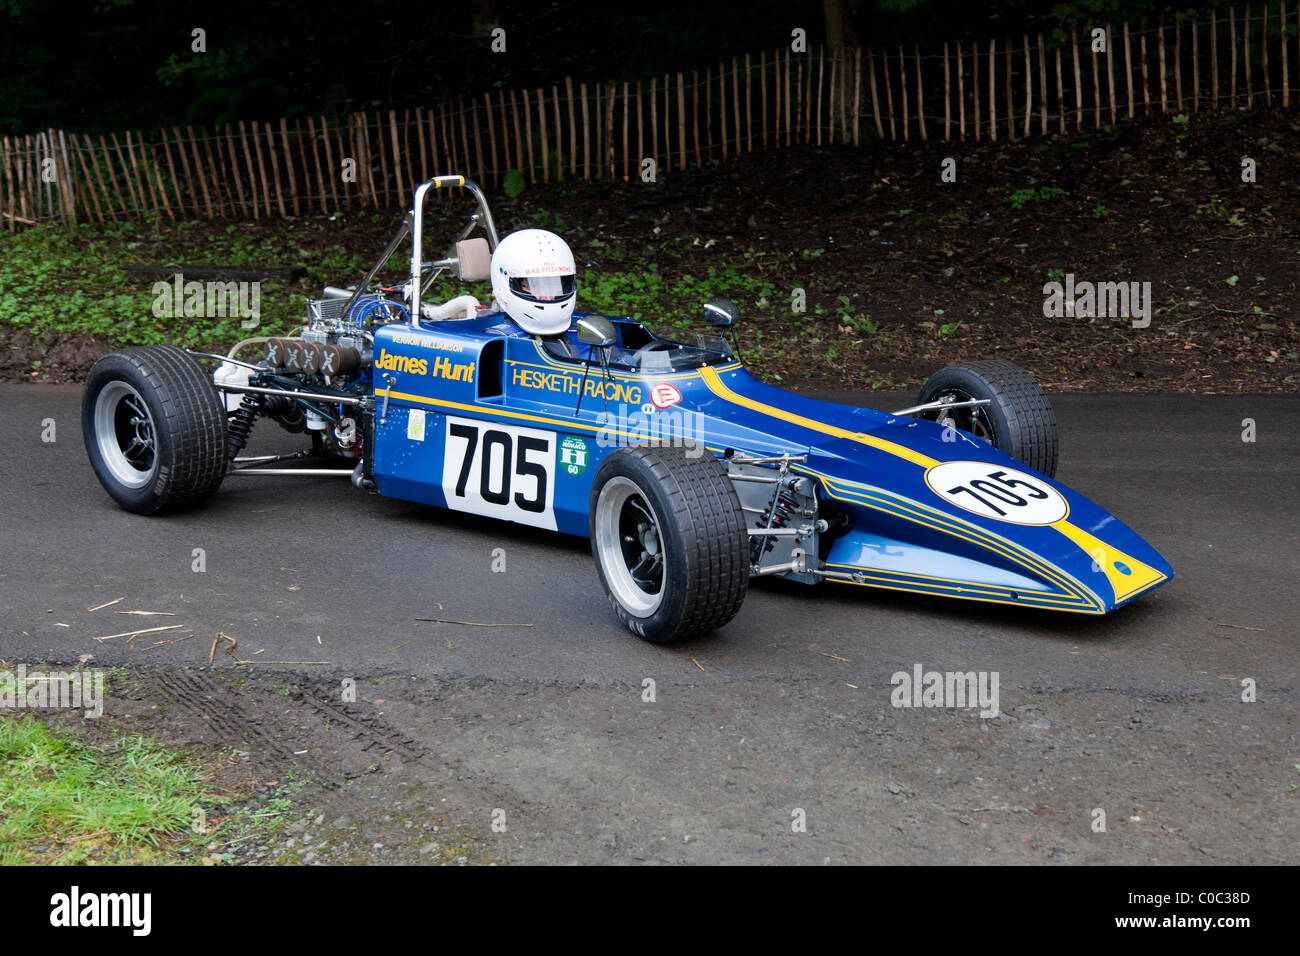 Hesketh Dastle single seater race car Stock Photo